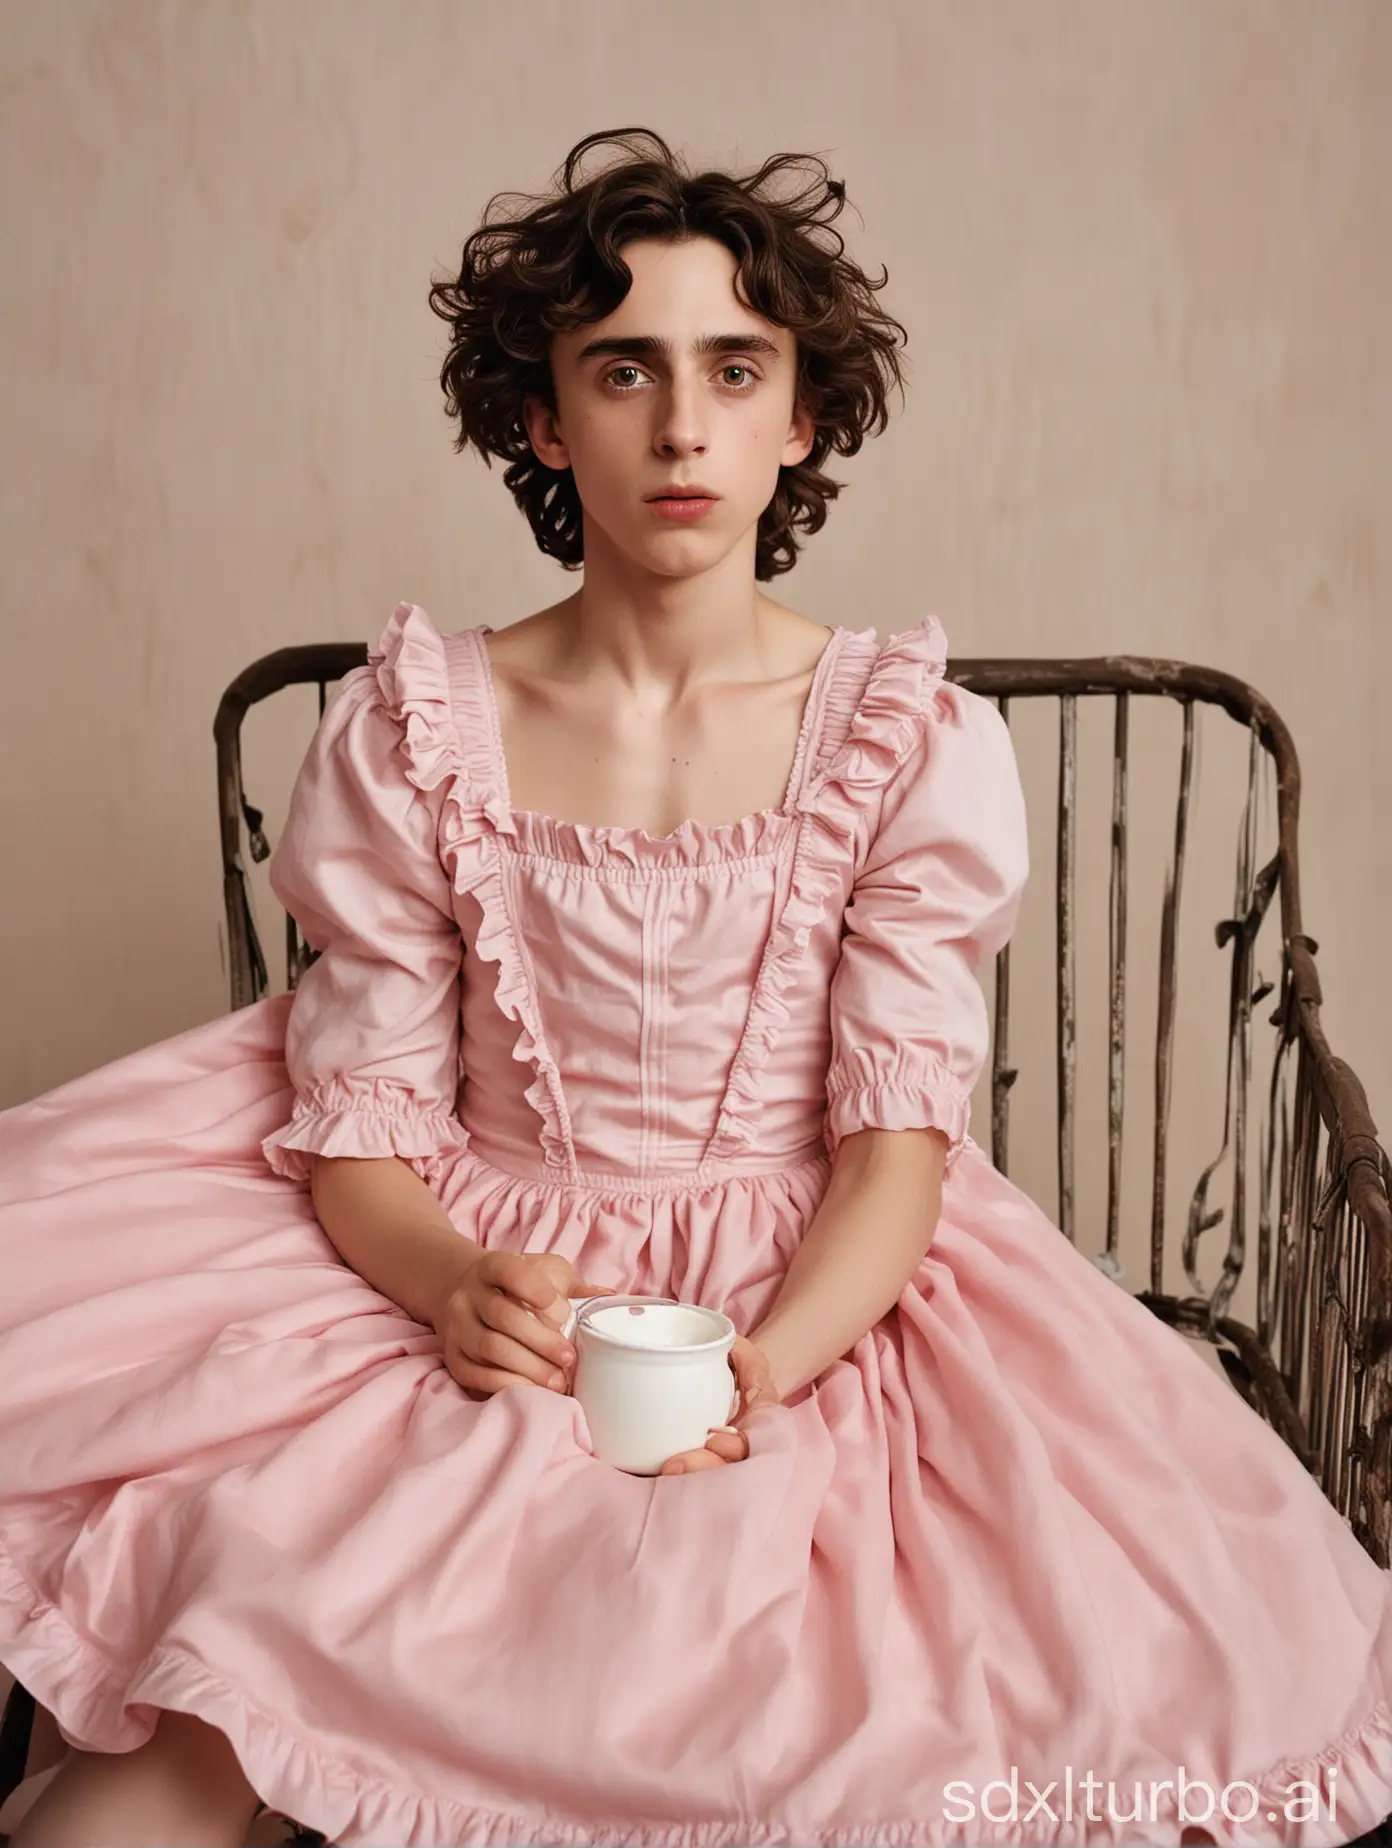 Gender-Role-Reversal-Timothe-Chalamet-Brat-in-Pink-Ballet-Dress-Throwing-Yogurt-Tantrum